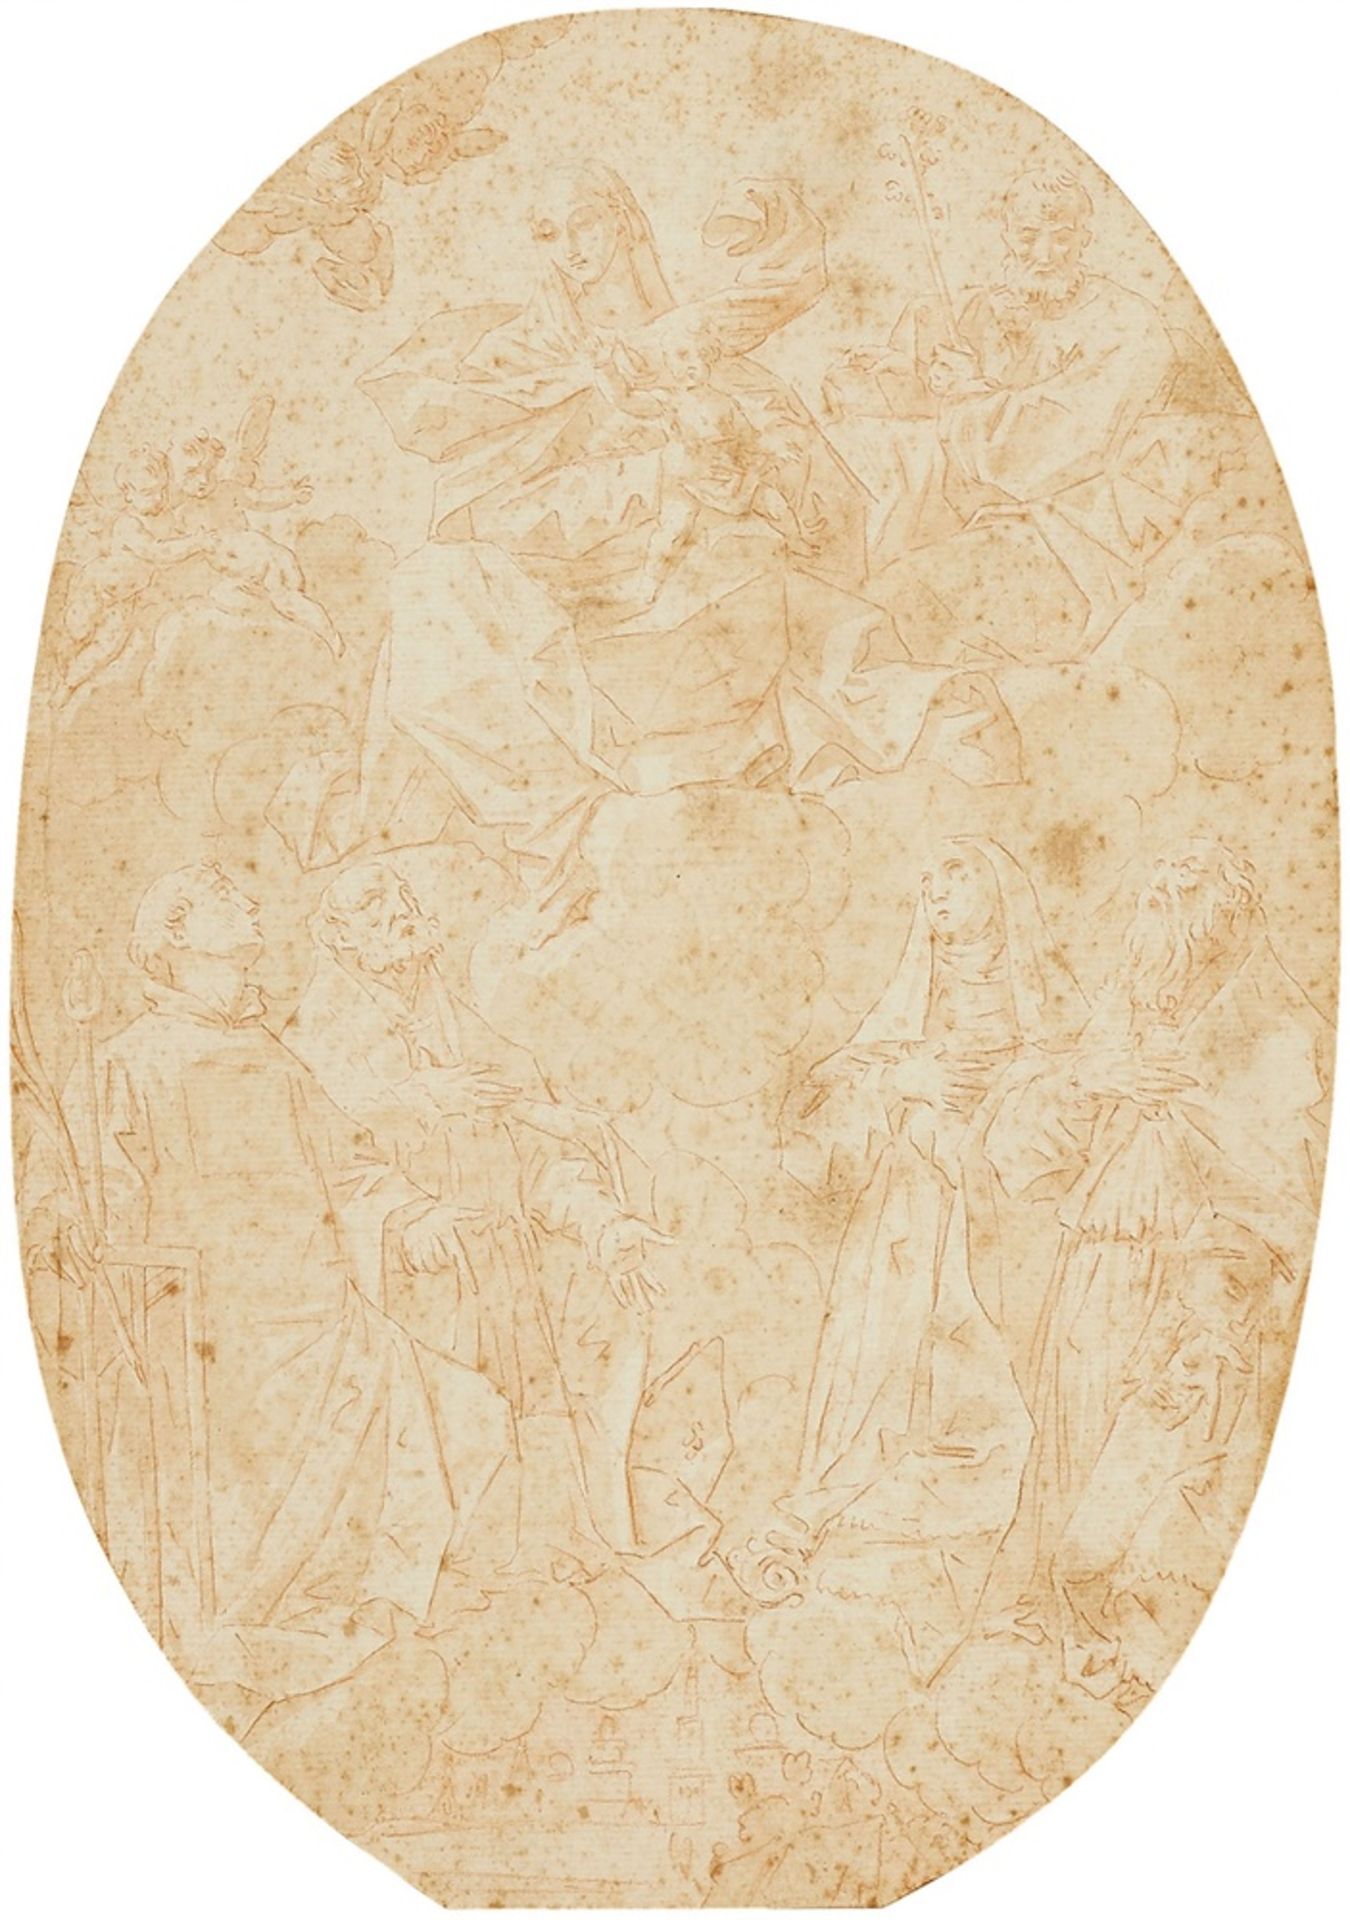 Italian School um 1700The Virgin Appearing to Four SaintsBrown chalk. 26 x 18 cm.Framed.